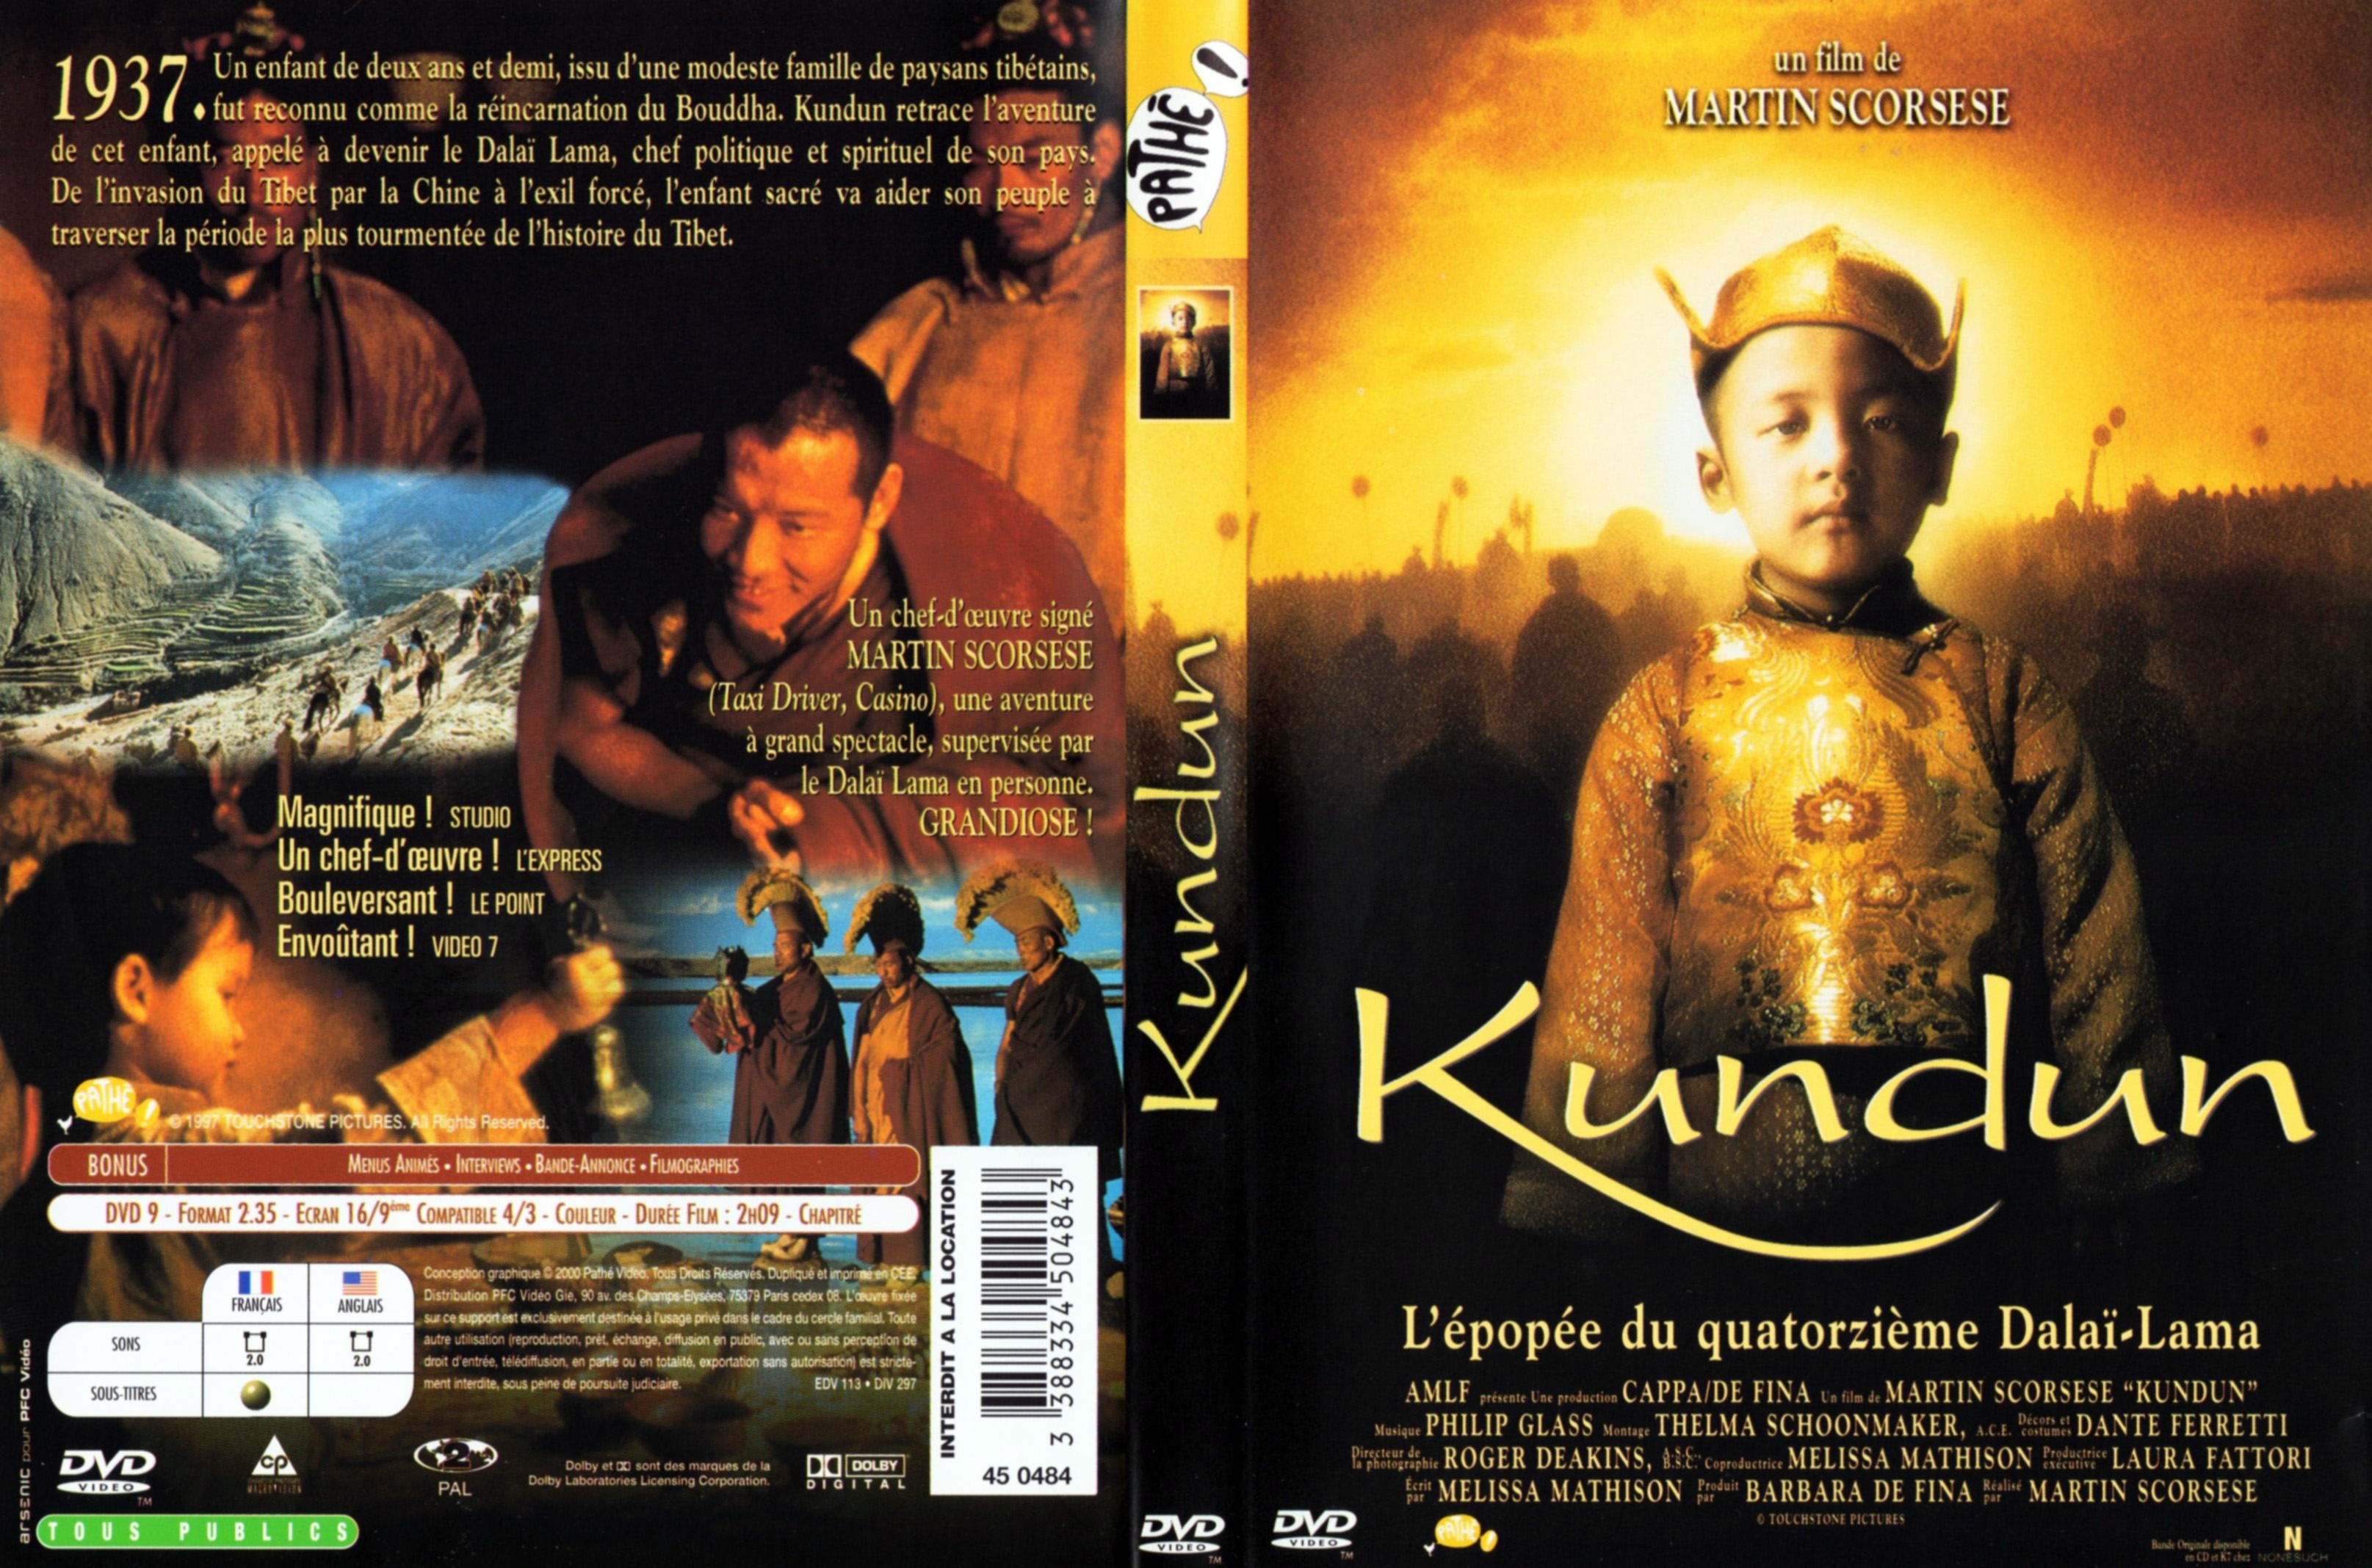 Jaquette DVD Kundun v2